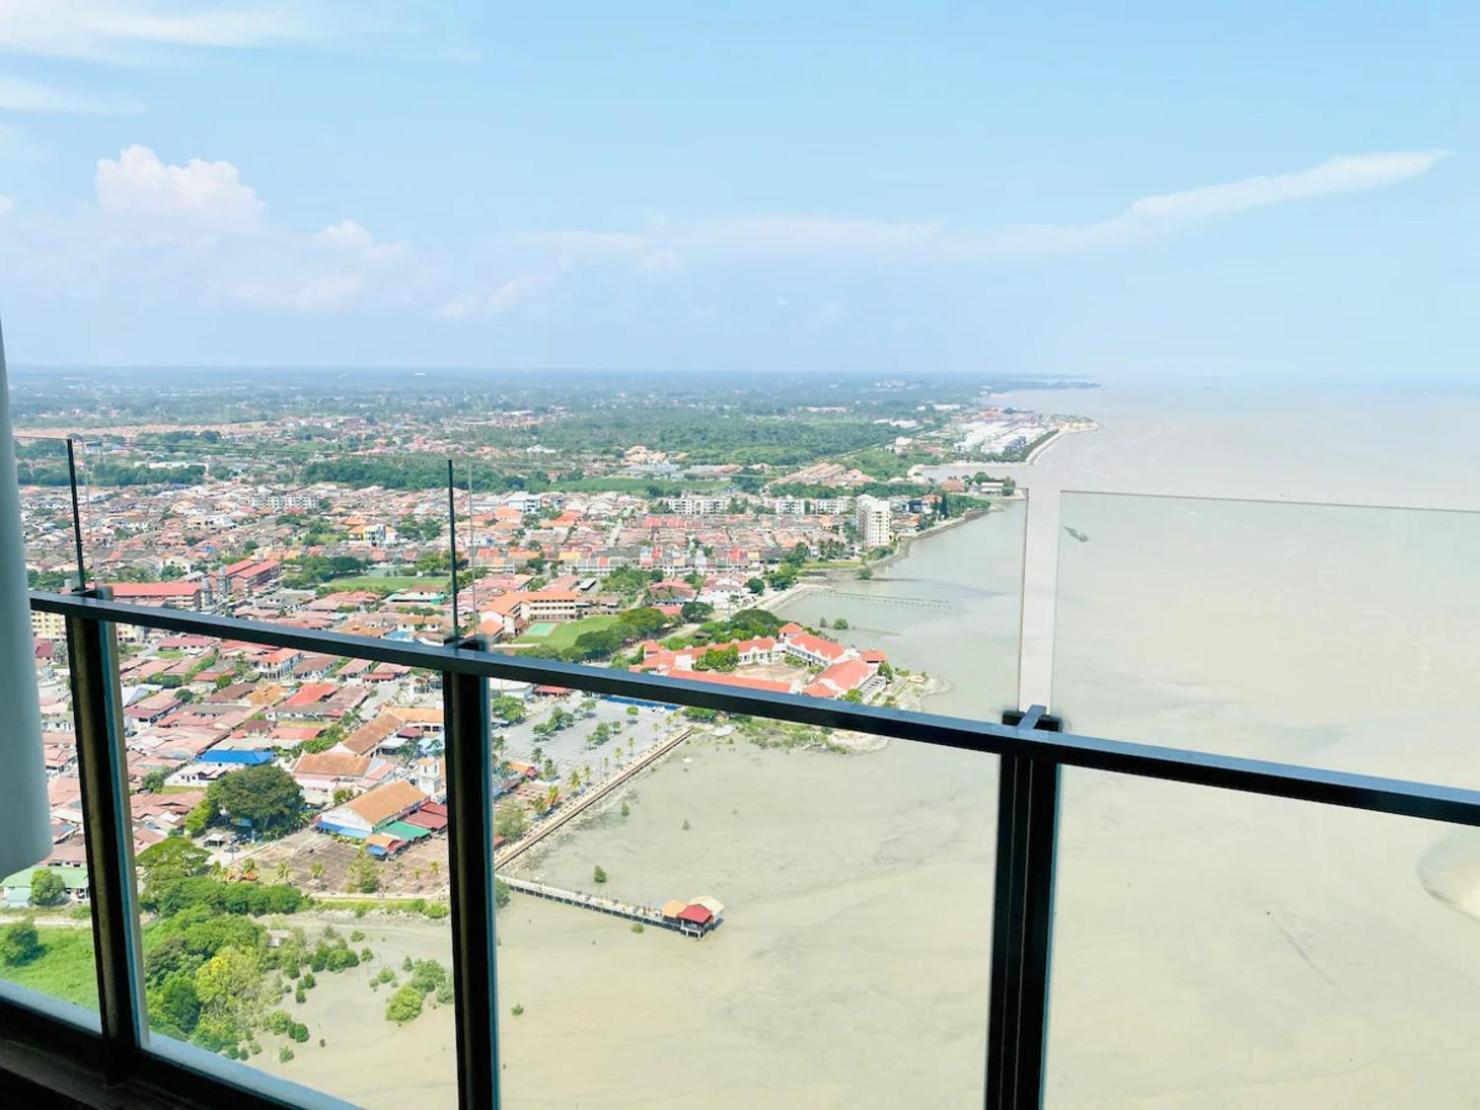 Silverscape Seaview Residence Melaka Extérieur photo